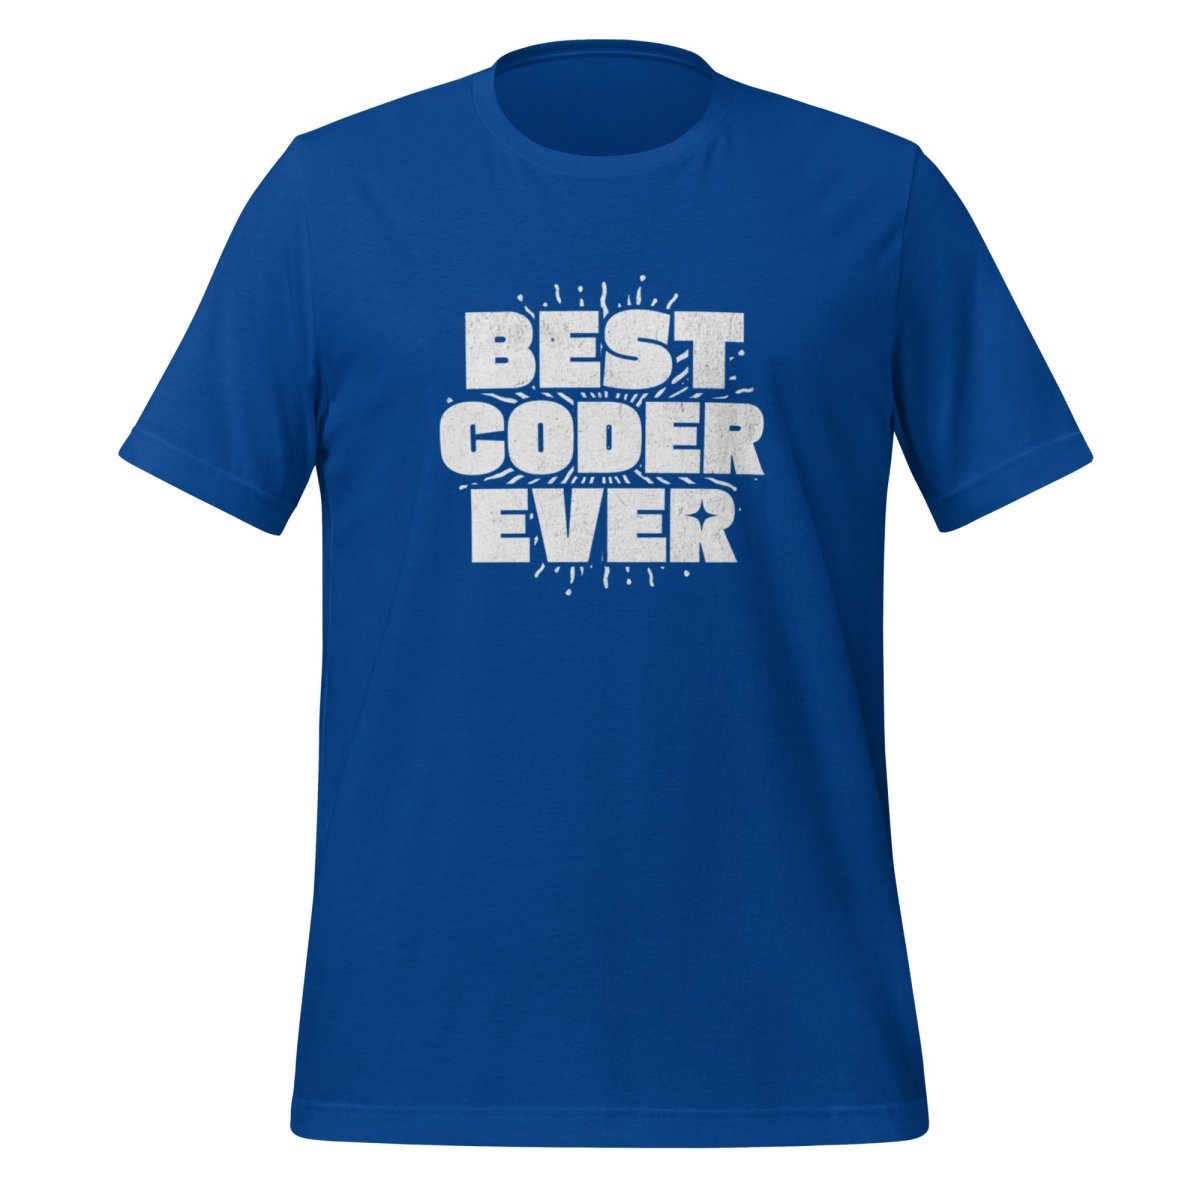 BEST CODER EVER T - Shirt (unisex) - True Royal - AI Store